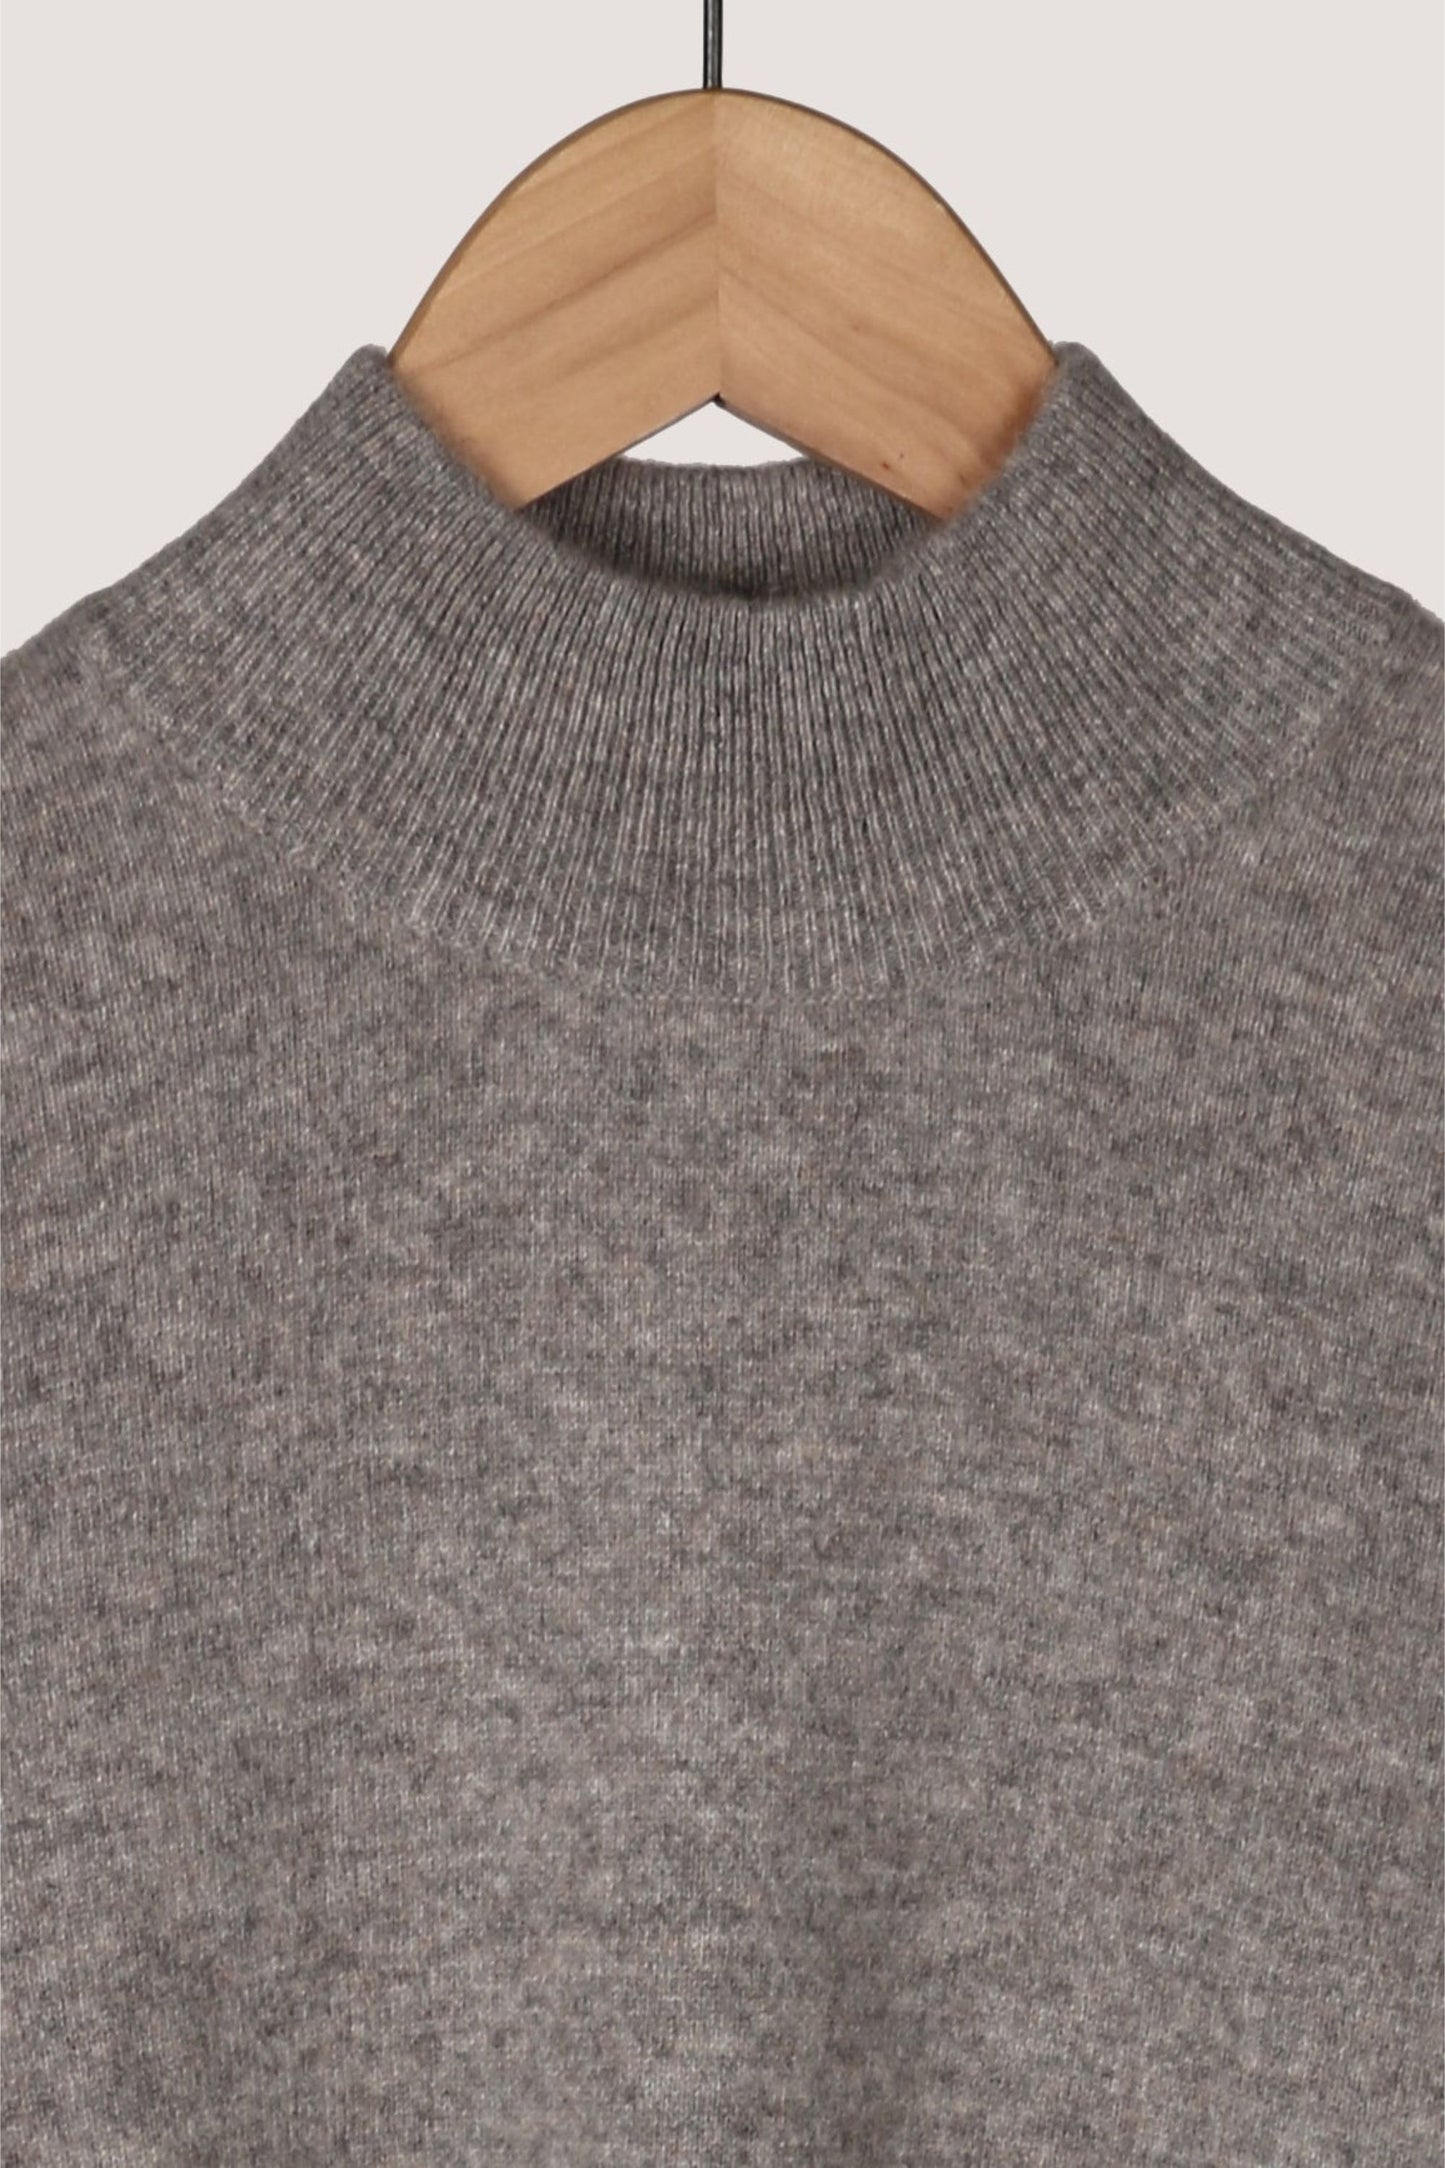 Half Roll Neck Sweater Mid Grey